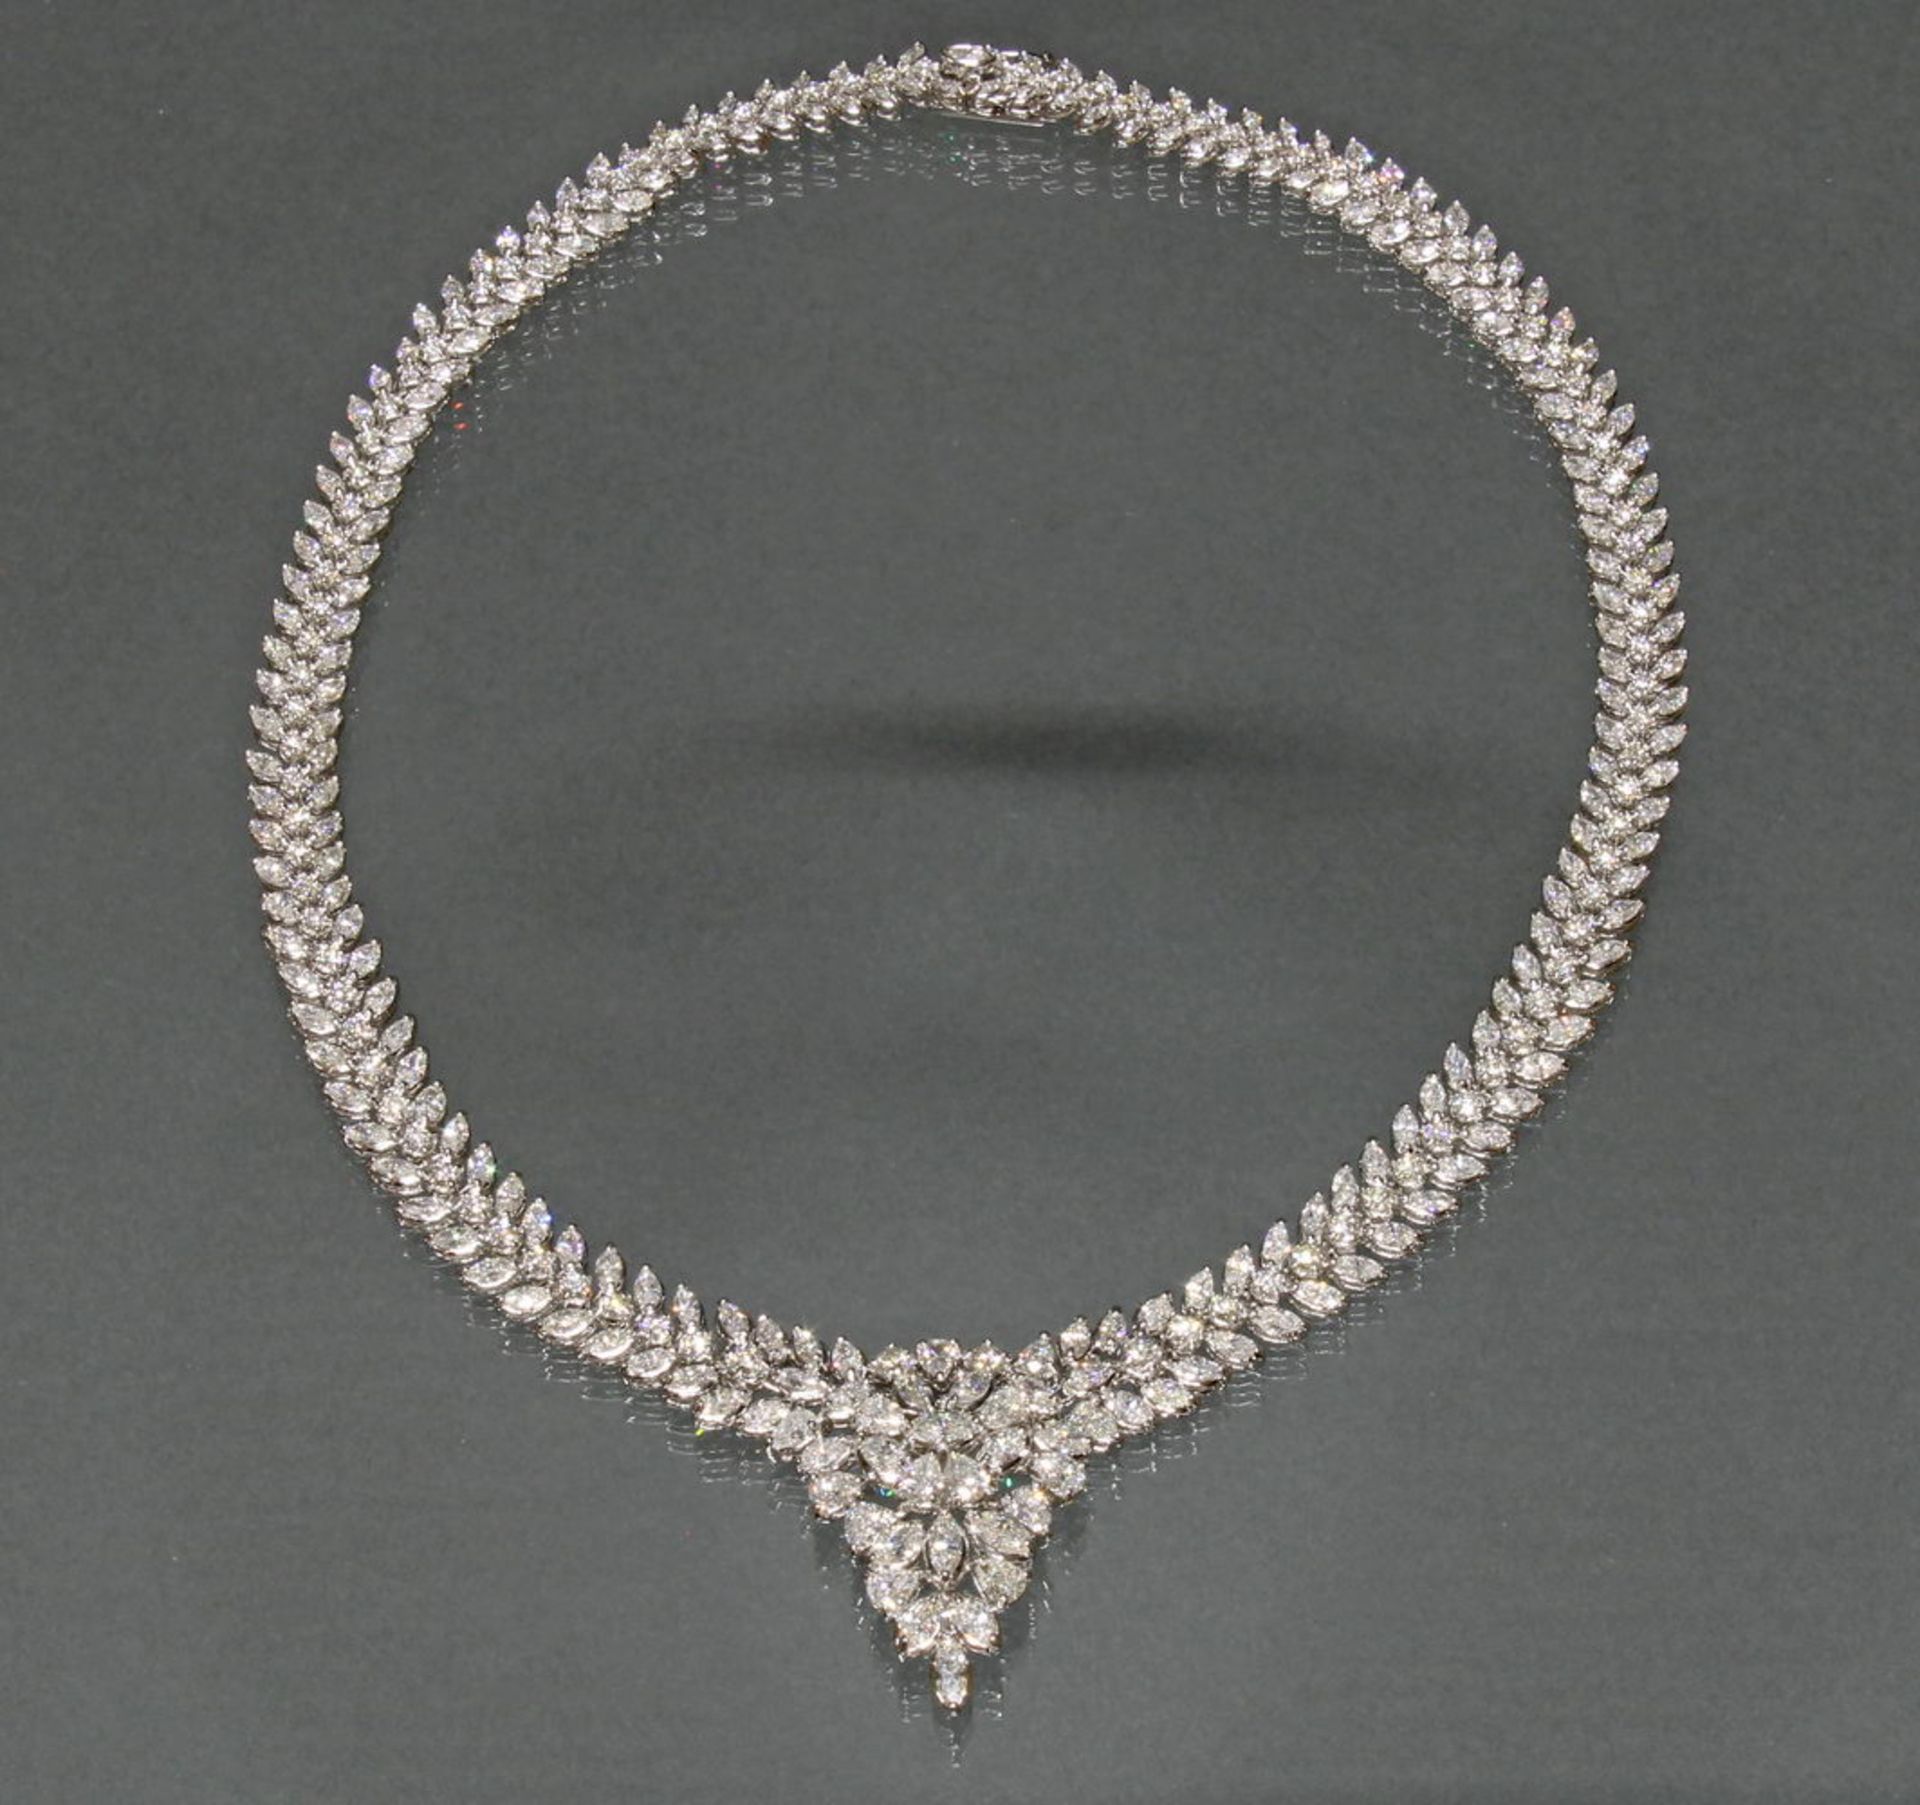 Collier, Atelier J.P. CAM, Fine Jewelery, Hongkong, WG 750, ca. 19.05 ct. - Image 3 of 4